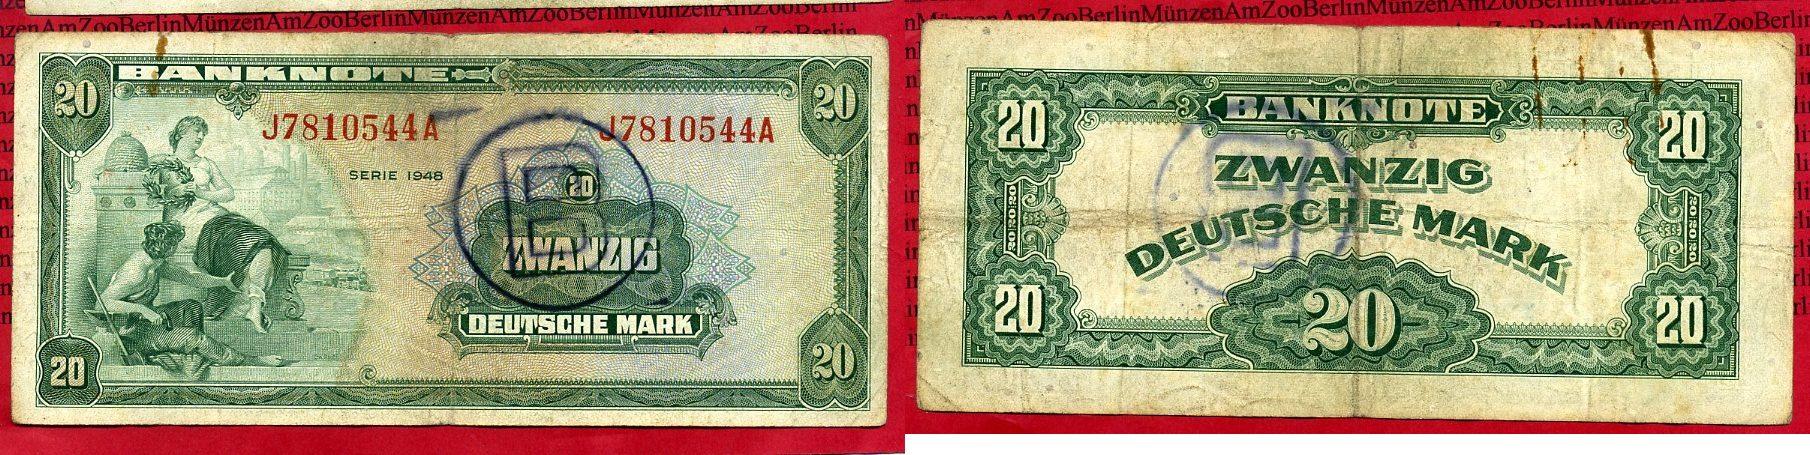 Foto Bundesrepublik Deutschland berlin 20 Dm Deutsche Mark Kopfgeld 1948 foto 63155